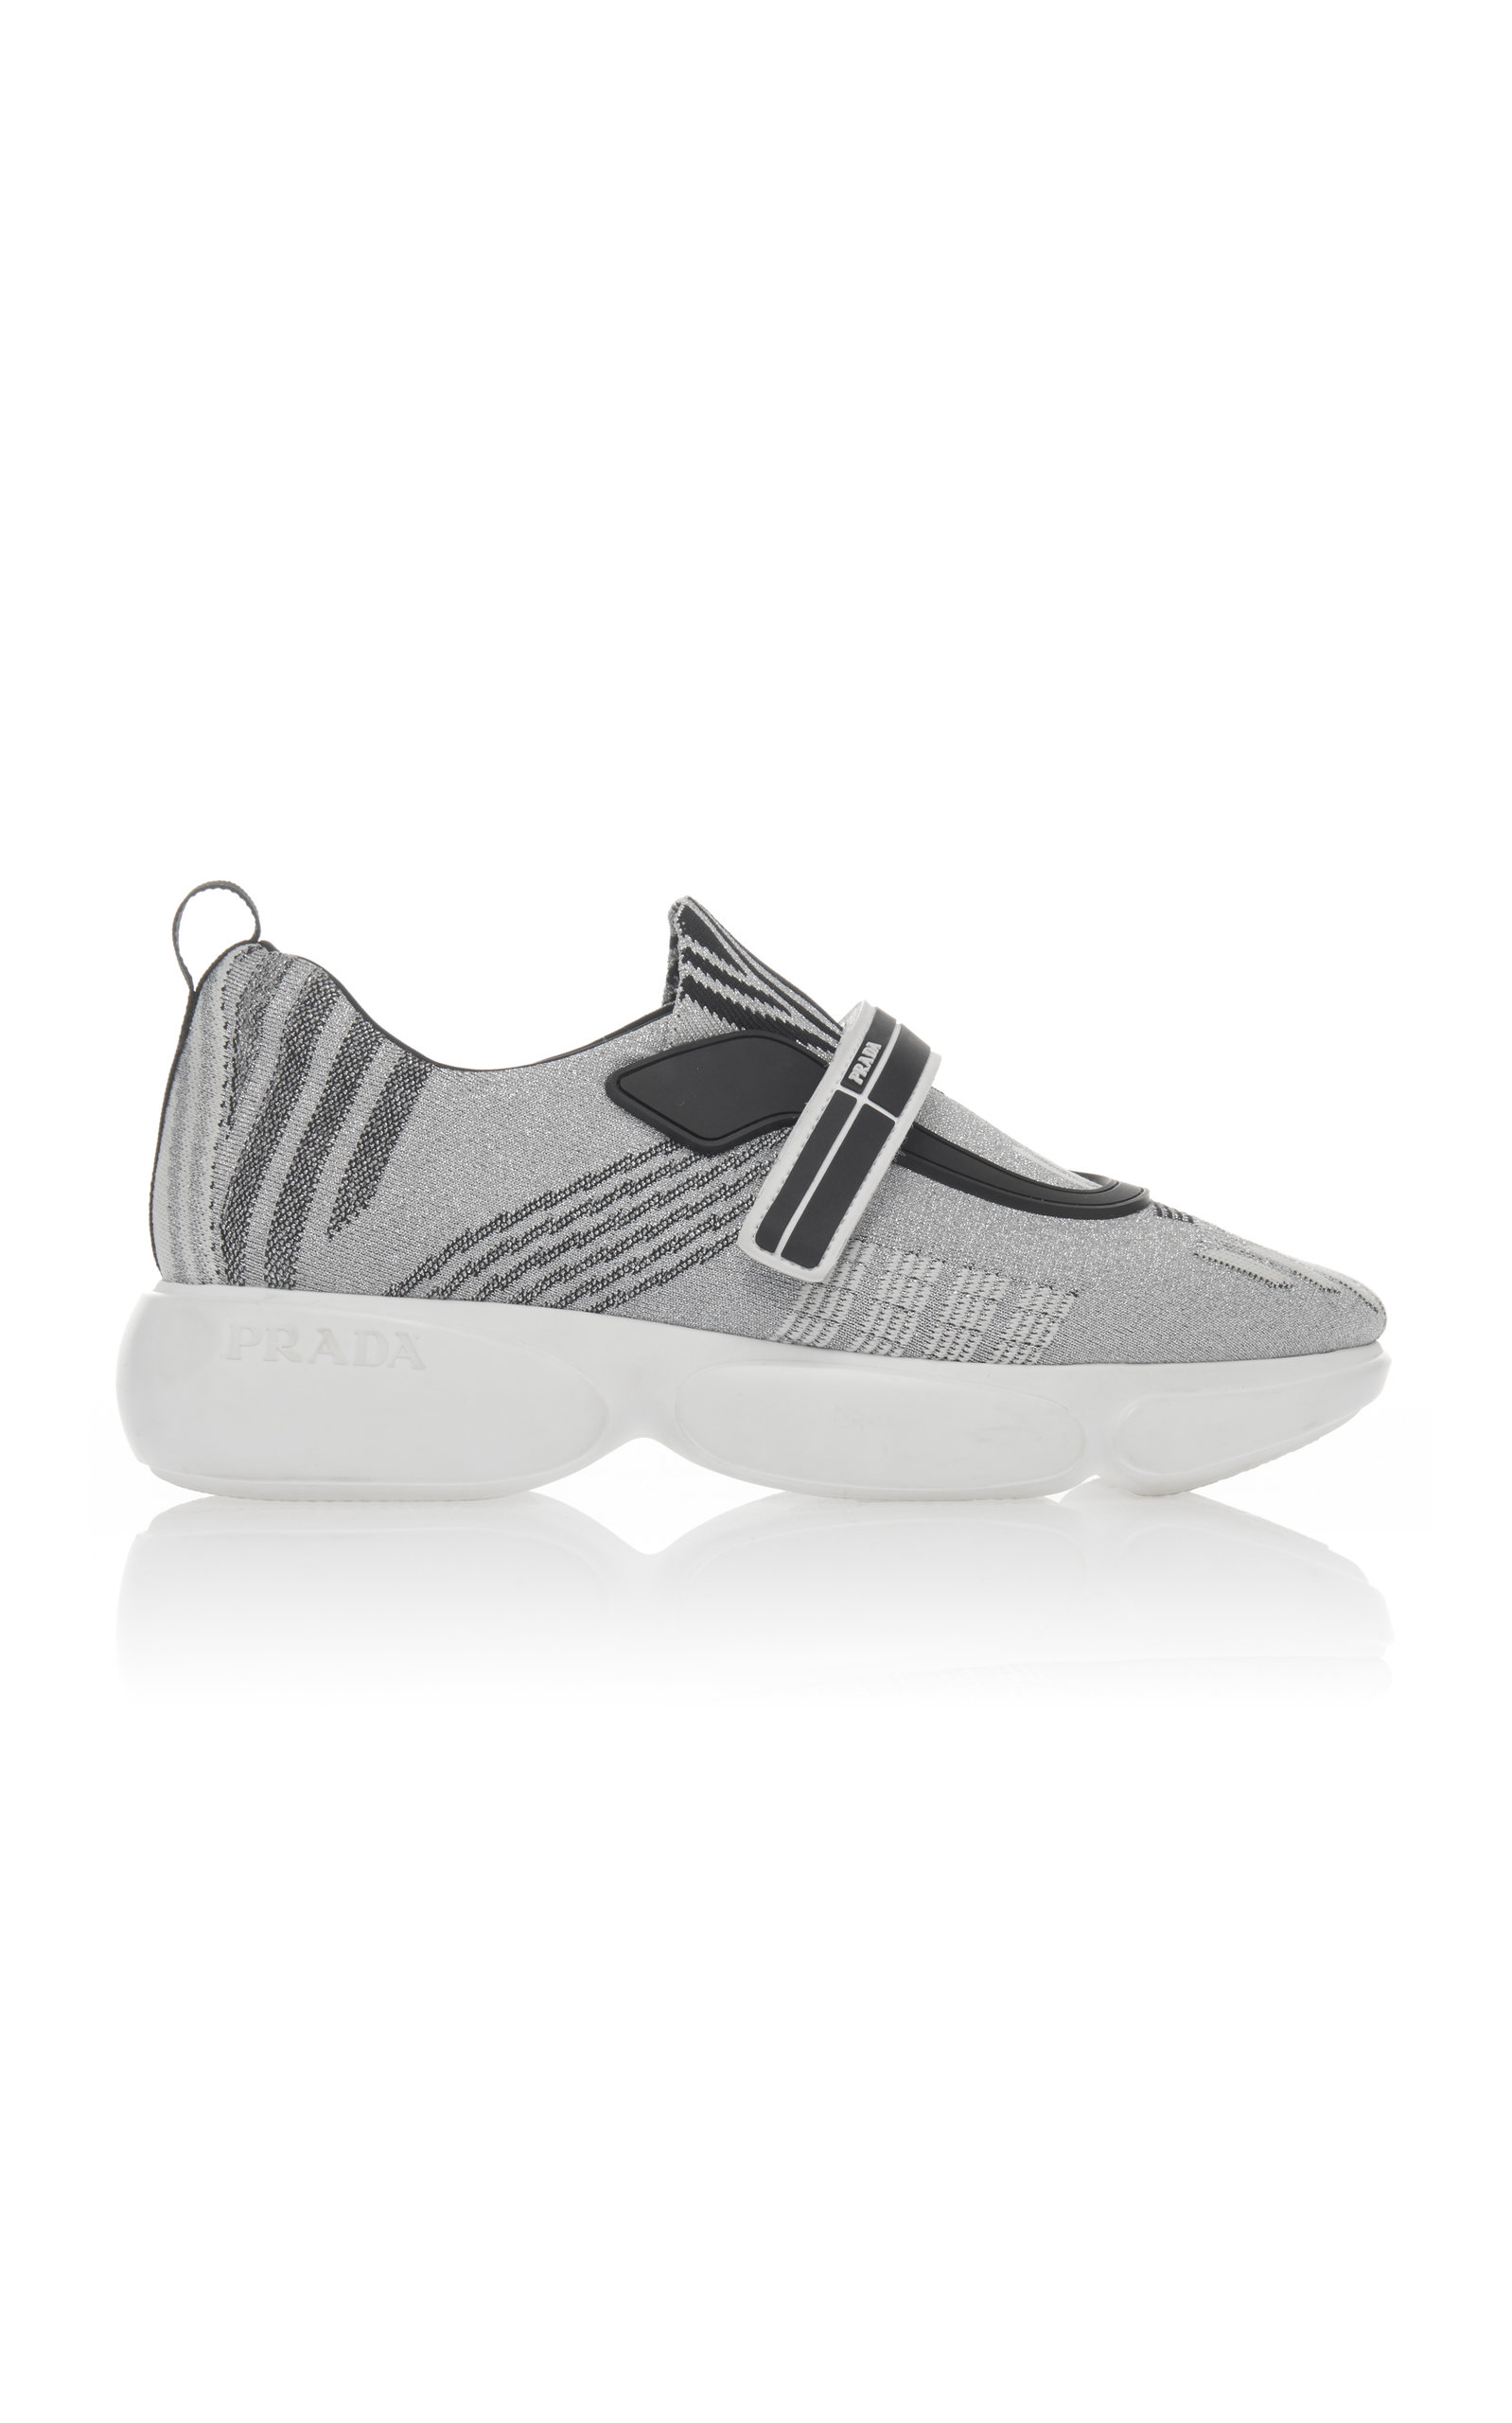 Prada - Women's Cloudbust Nylon Slip On Sneakers - Grey - Moda Operandi